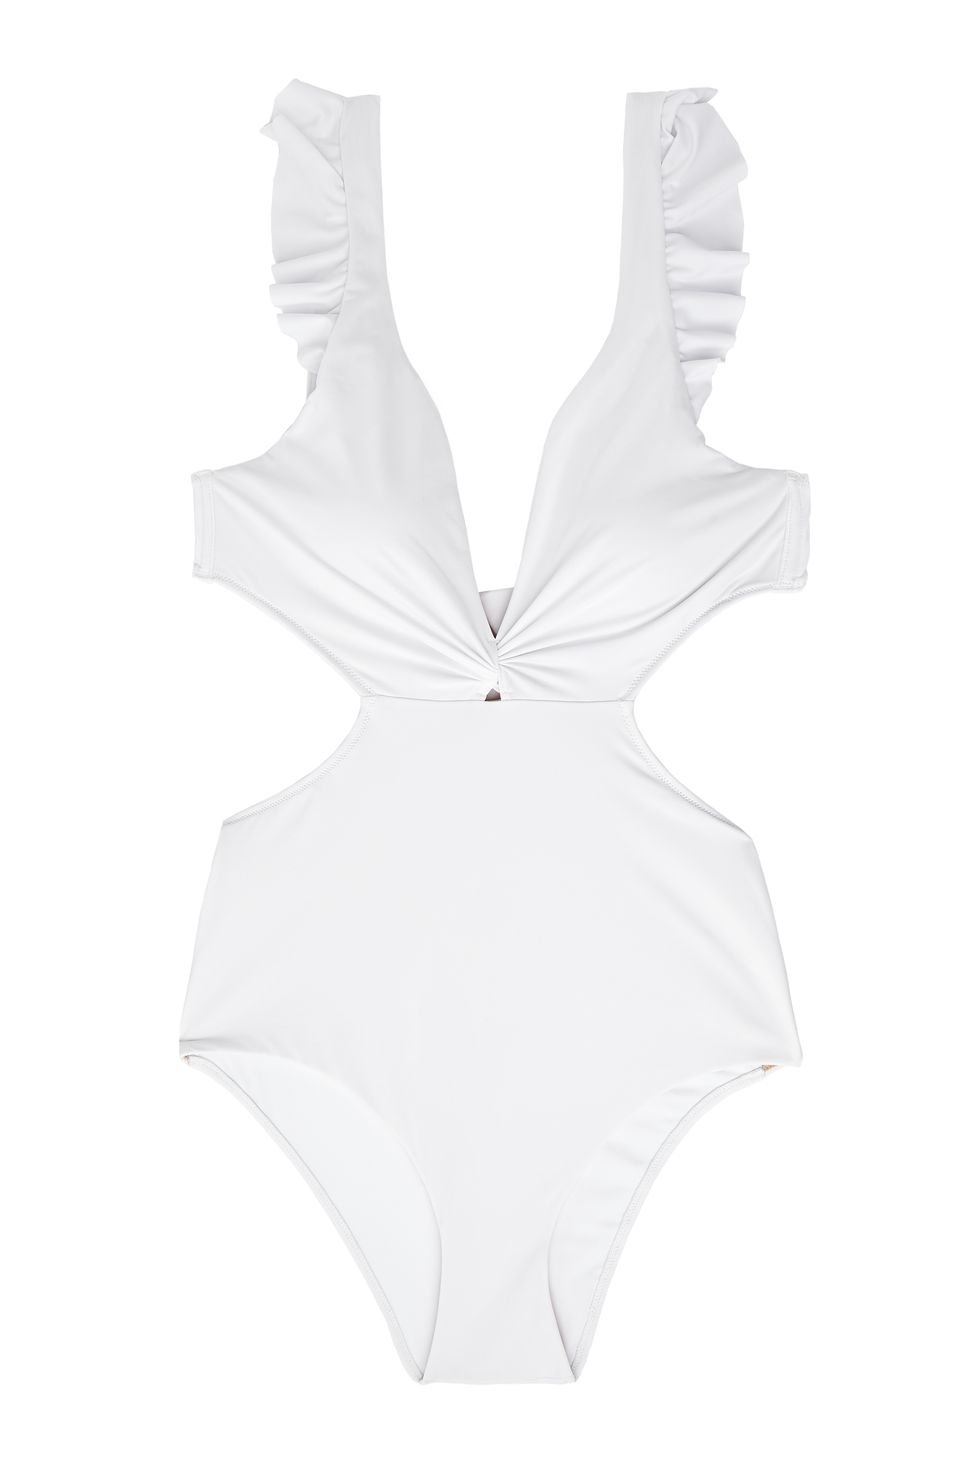 White, Clothing, Monokini, One-piece swimsuit, Swimwear, Maillot, Bikini, Swimsuit bottom, Lingerie, 